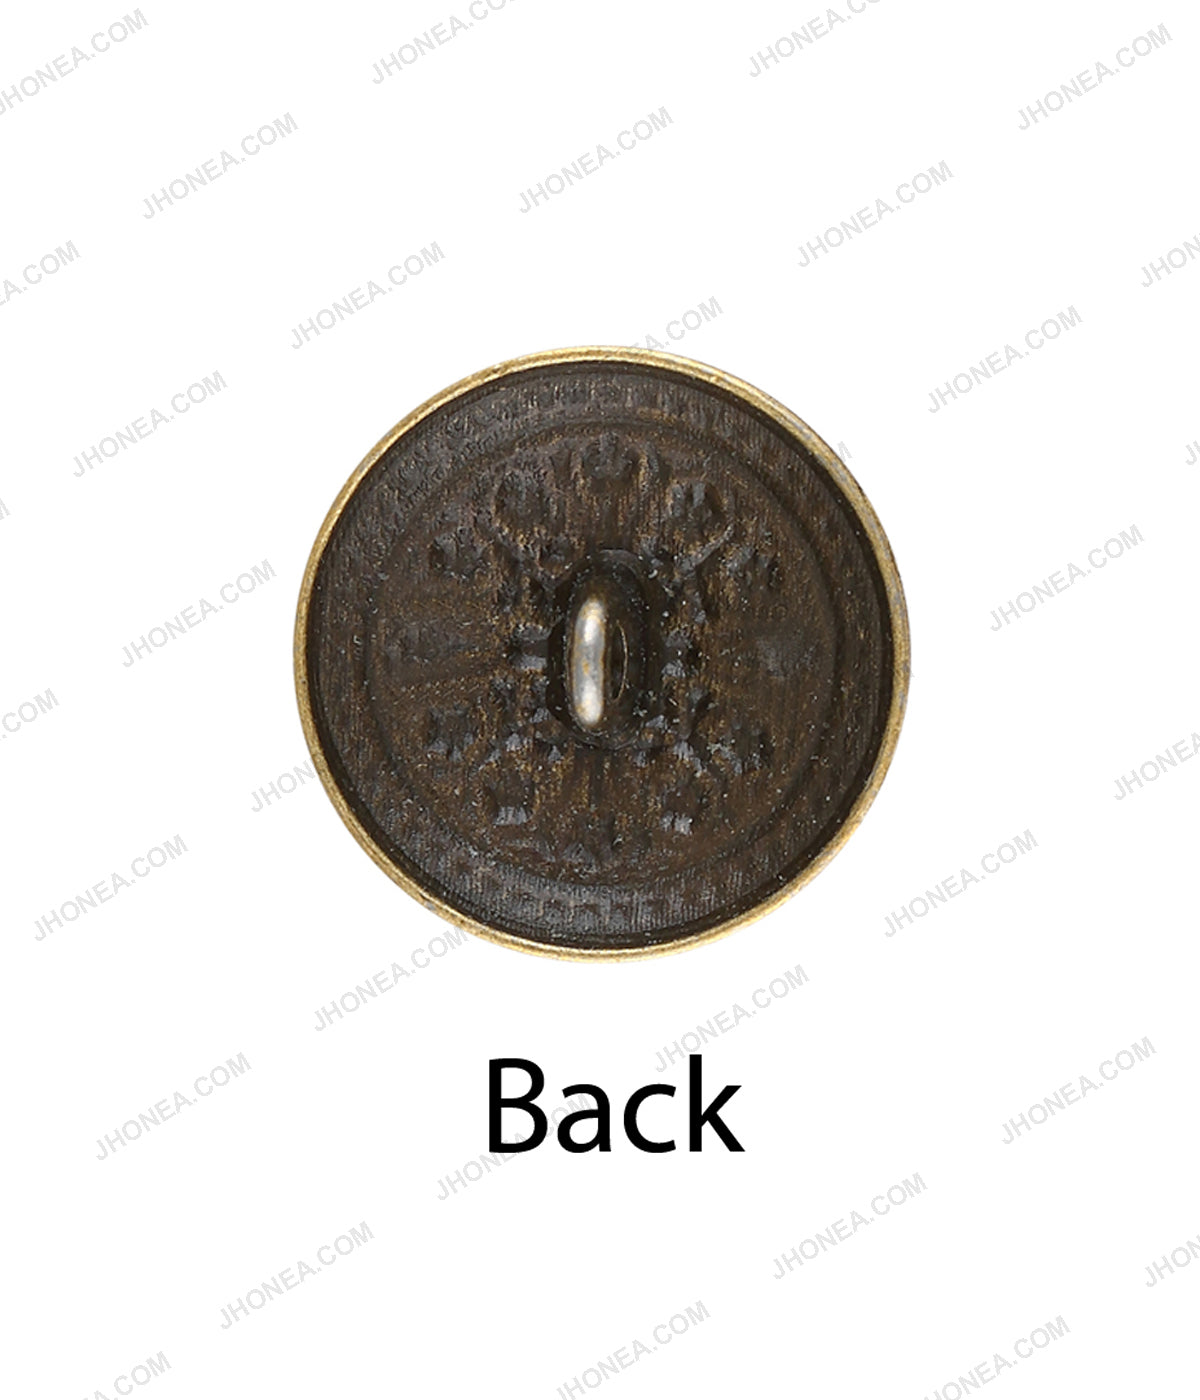 Exquisite Antique Medieval Design Sherwani Button